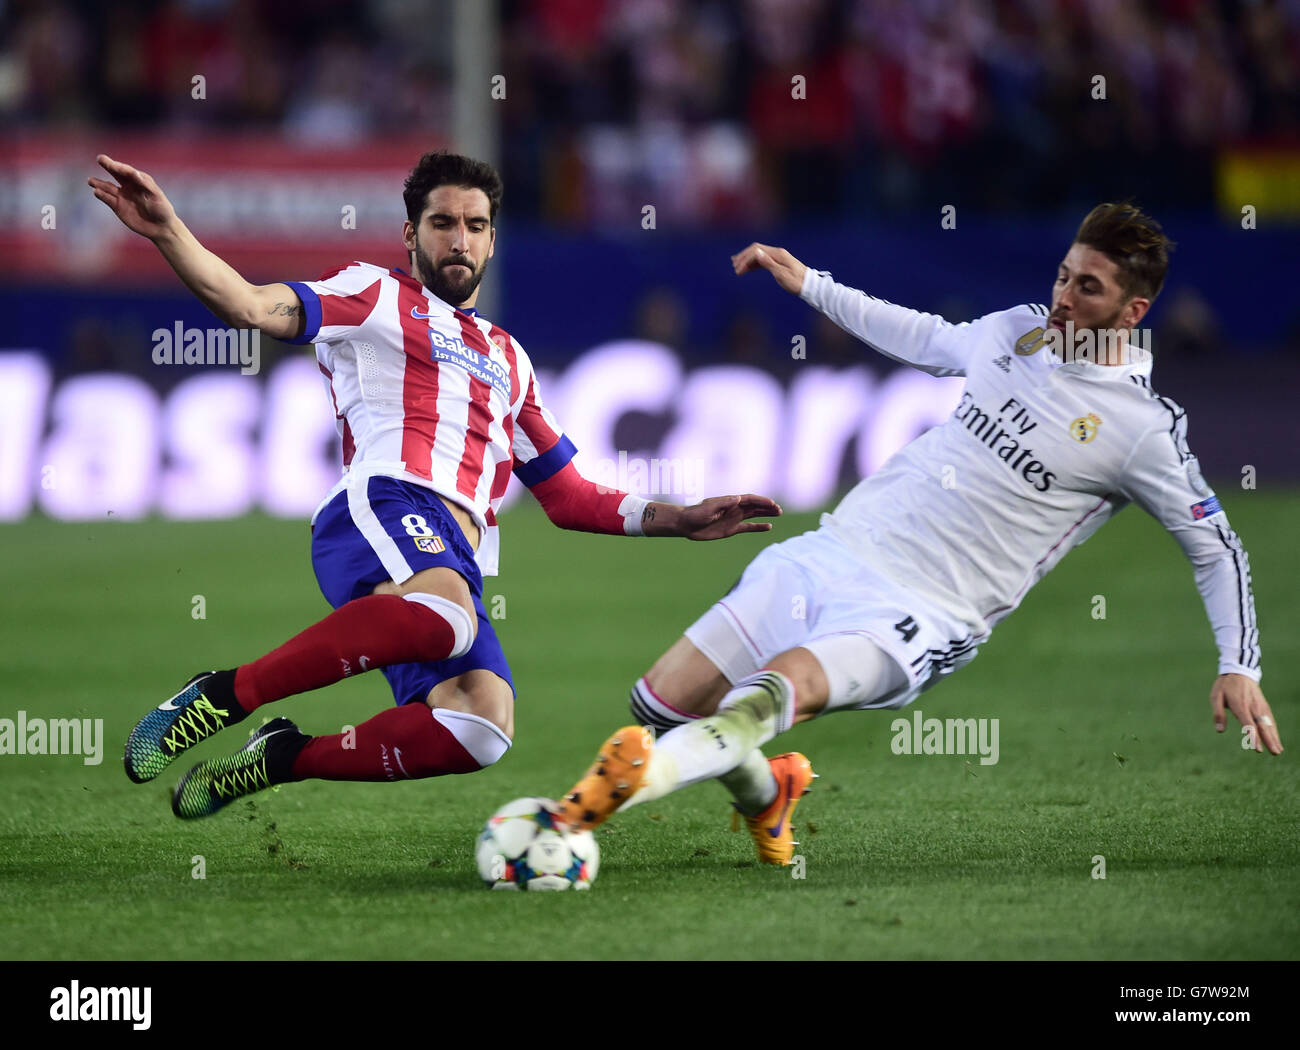 Soccer - UEFA Champions League - Quarter Final - First Leg - Atletico Madrid v Real Madrid - Vicente Calderon Stock Photo